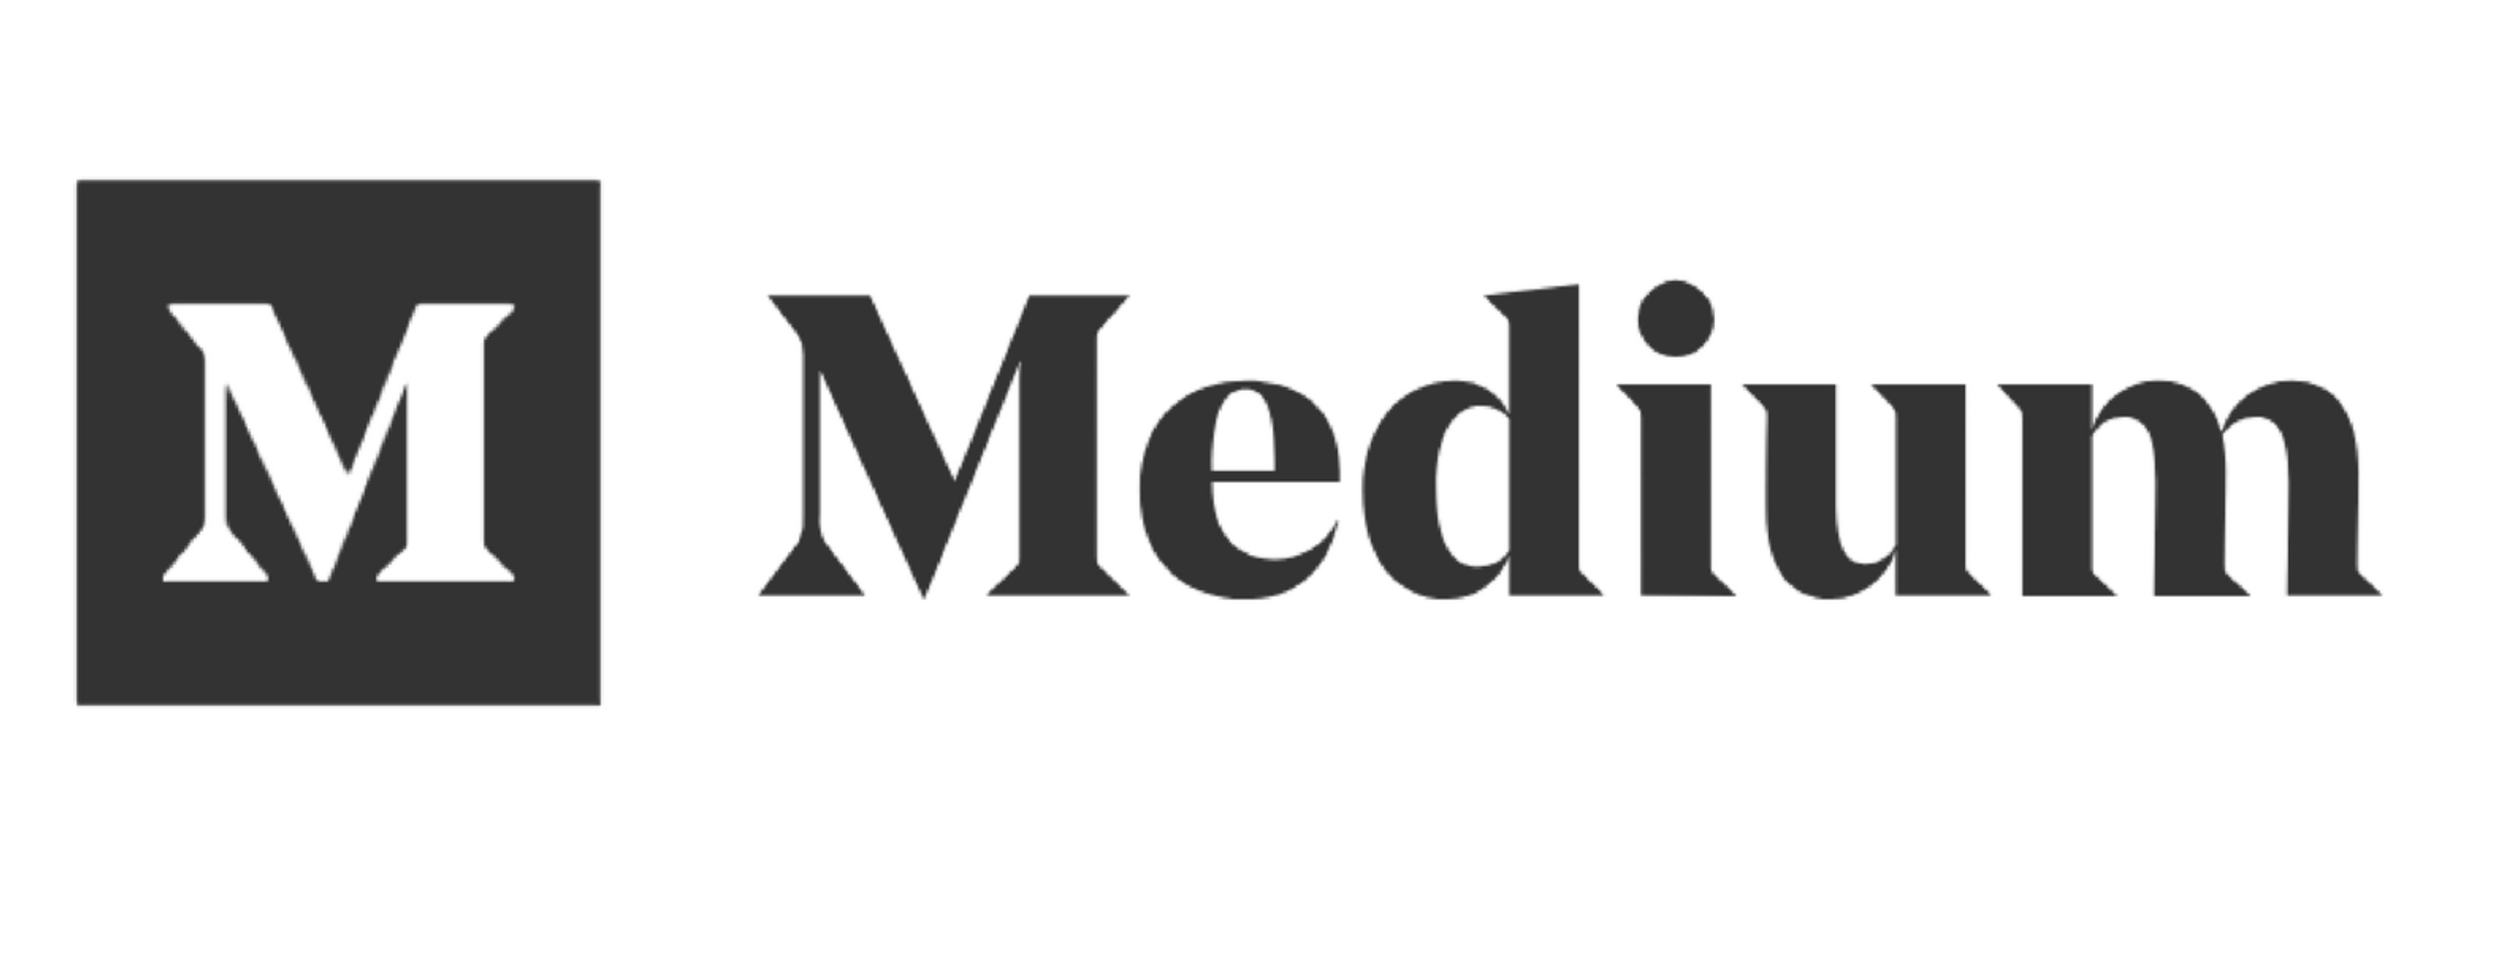 medium-new-logo-2017.png